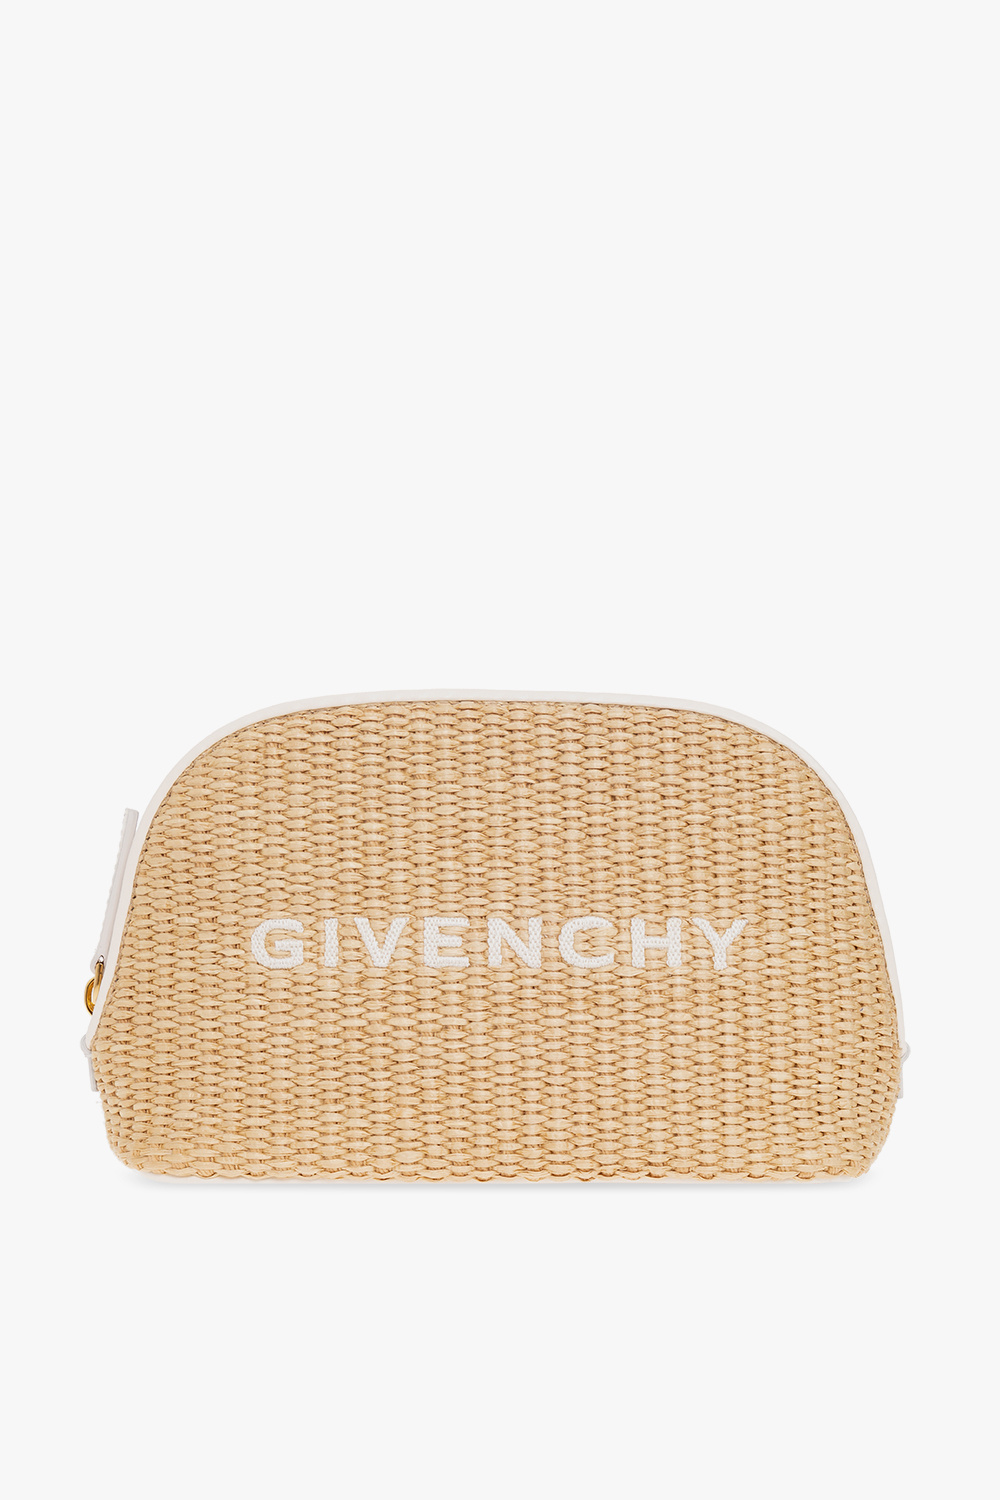 givenchy Lavender Wash bag with logo